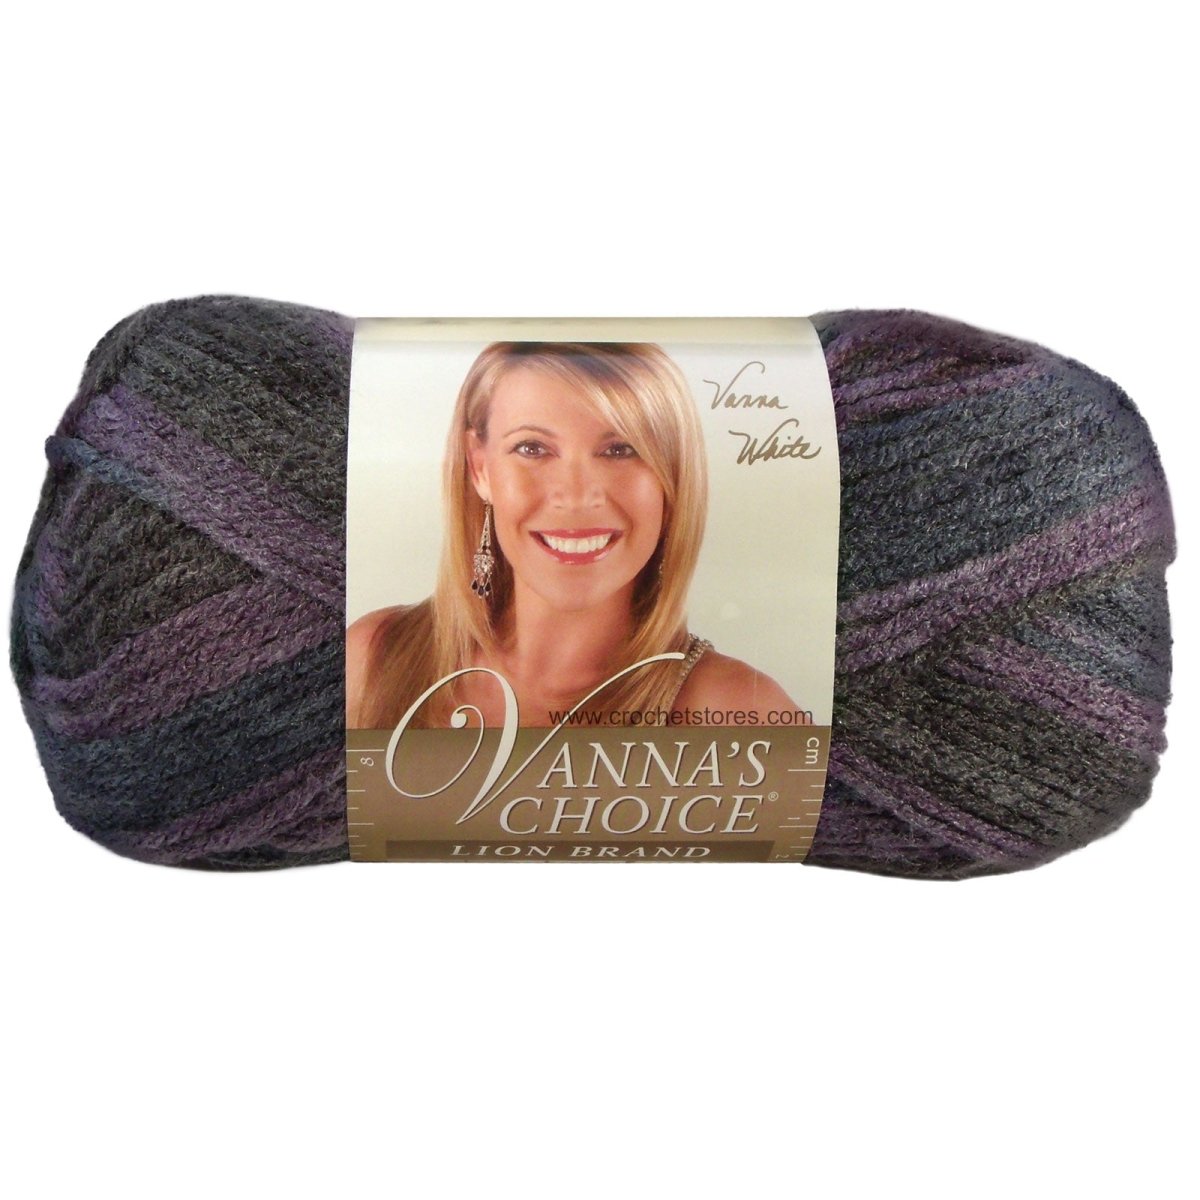 VANNAS CHOICE - Crochetstores